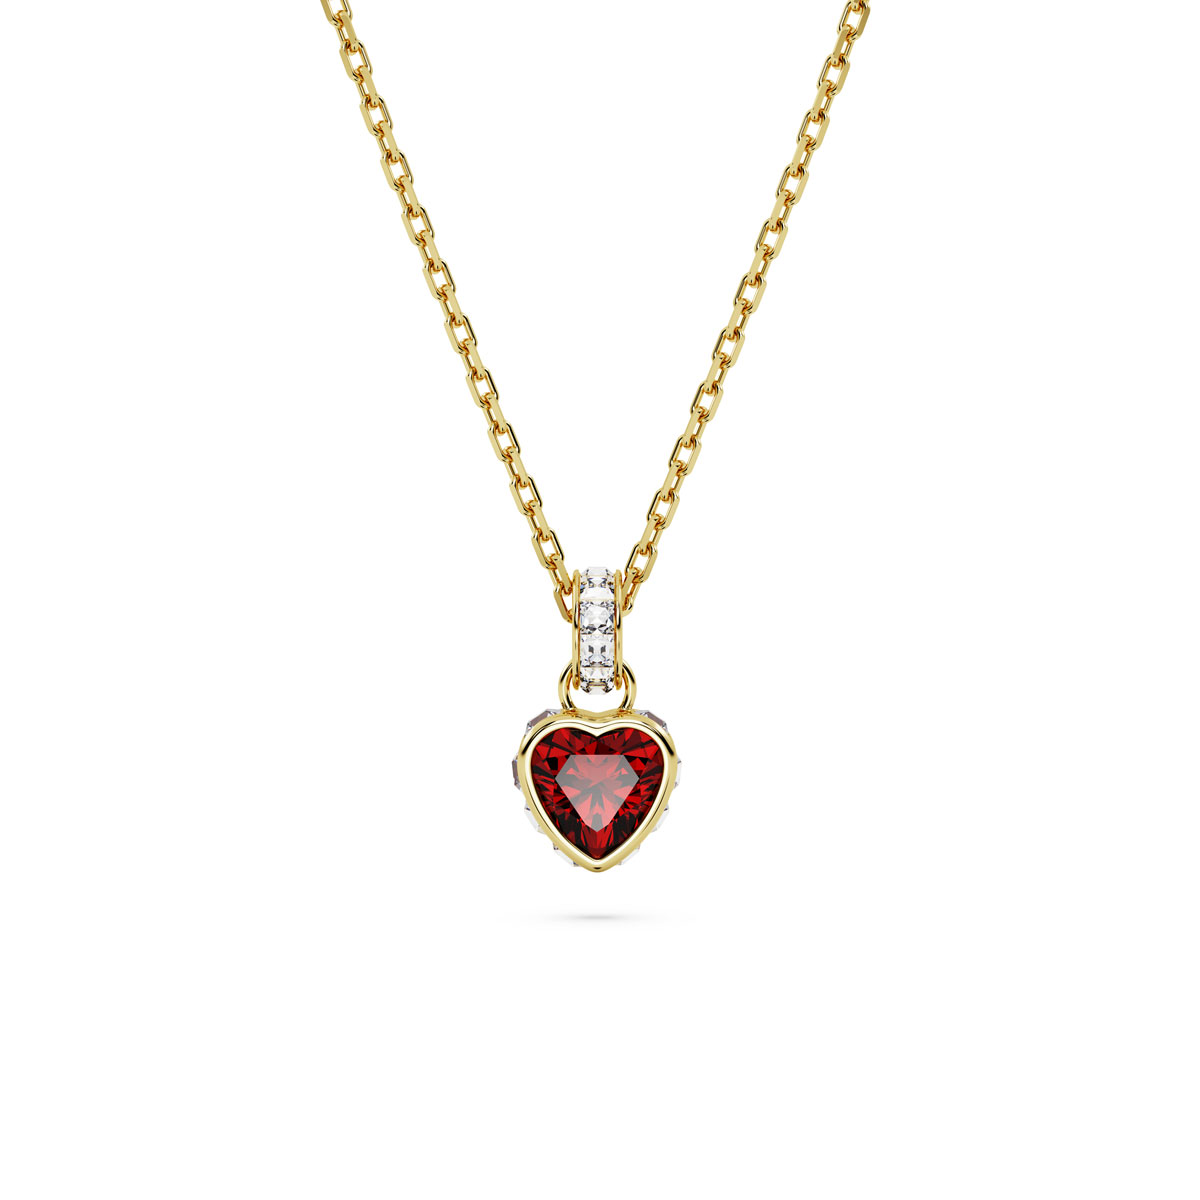 Swarovski Stilla Red Heart and Gold Pendant Necklace